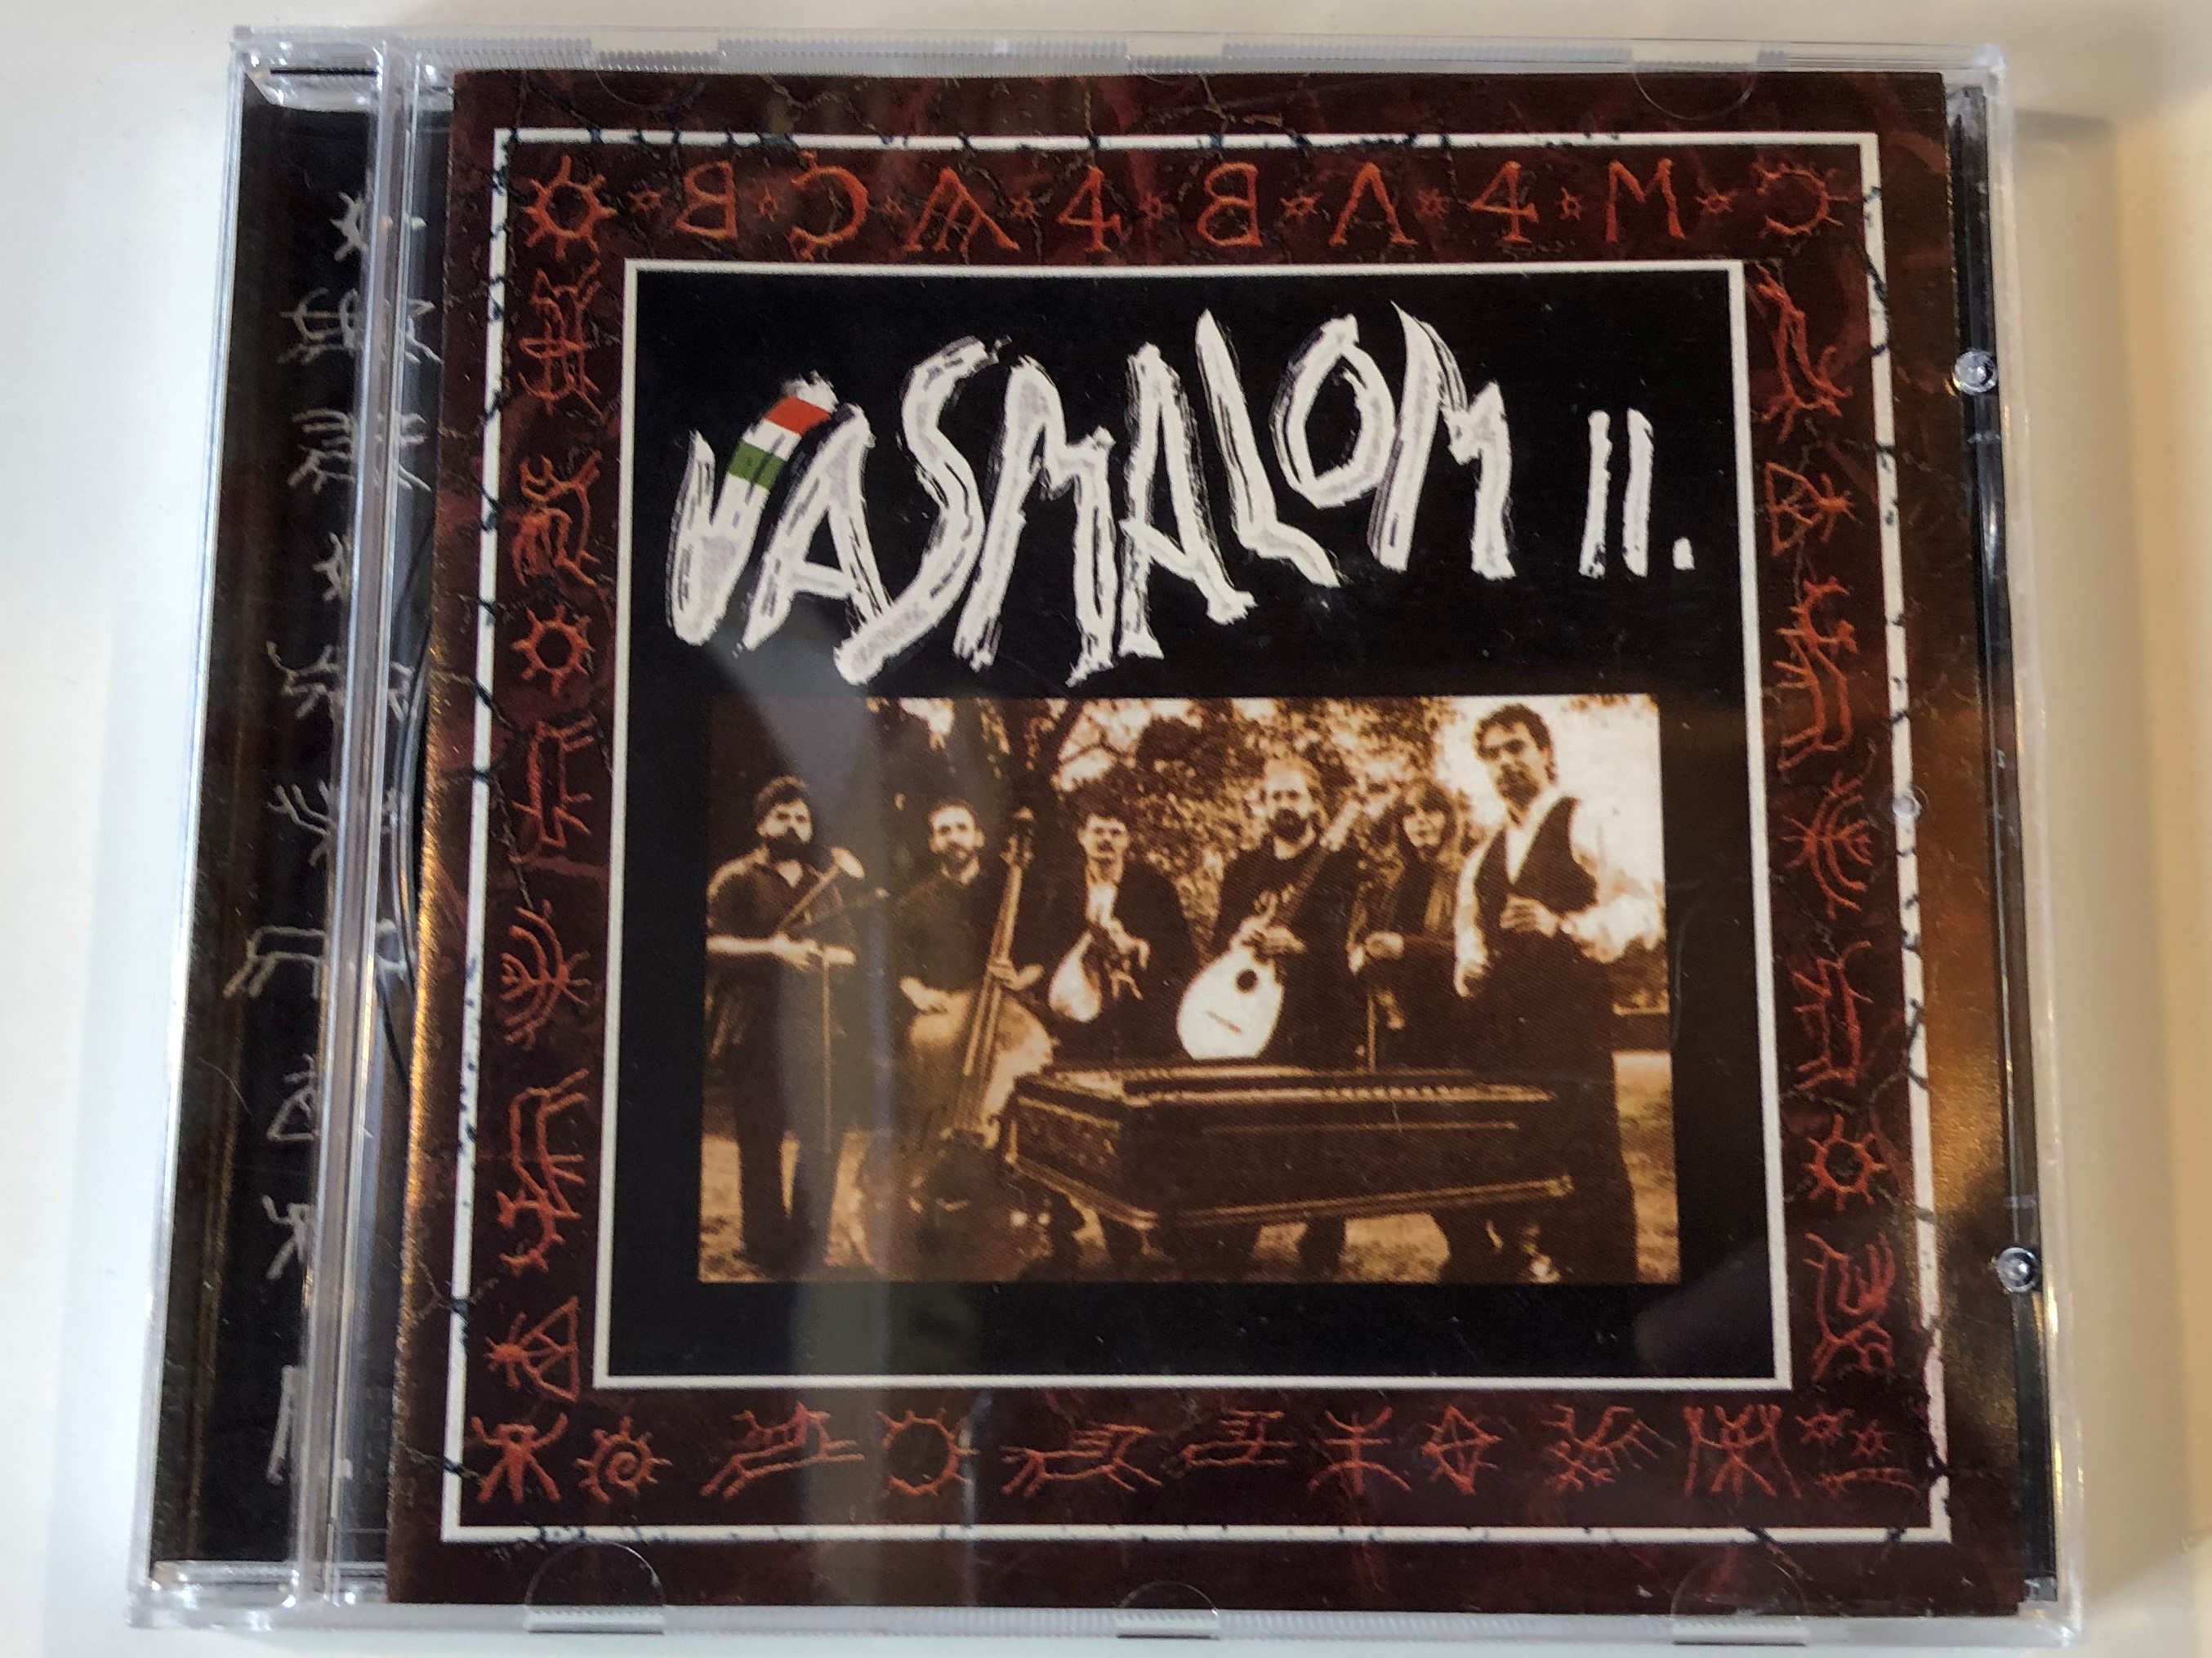 vasmalom-ii.-periferic-records-audio-cd-2000-bgcd-077-1-.jpg